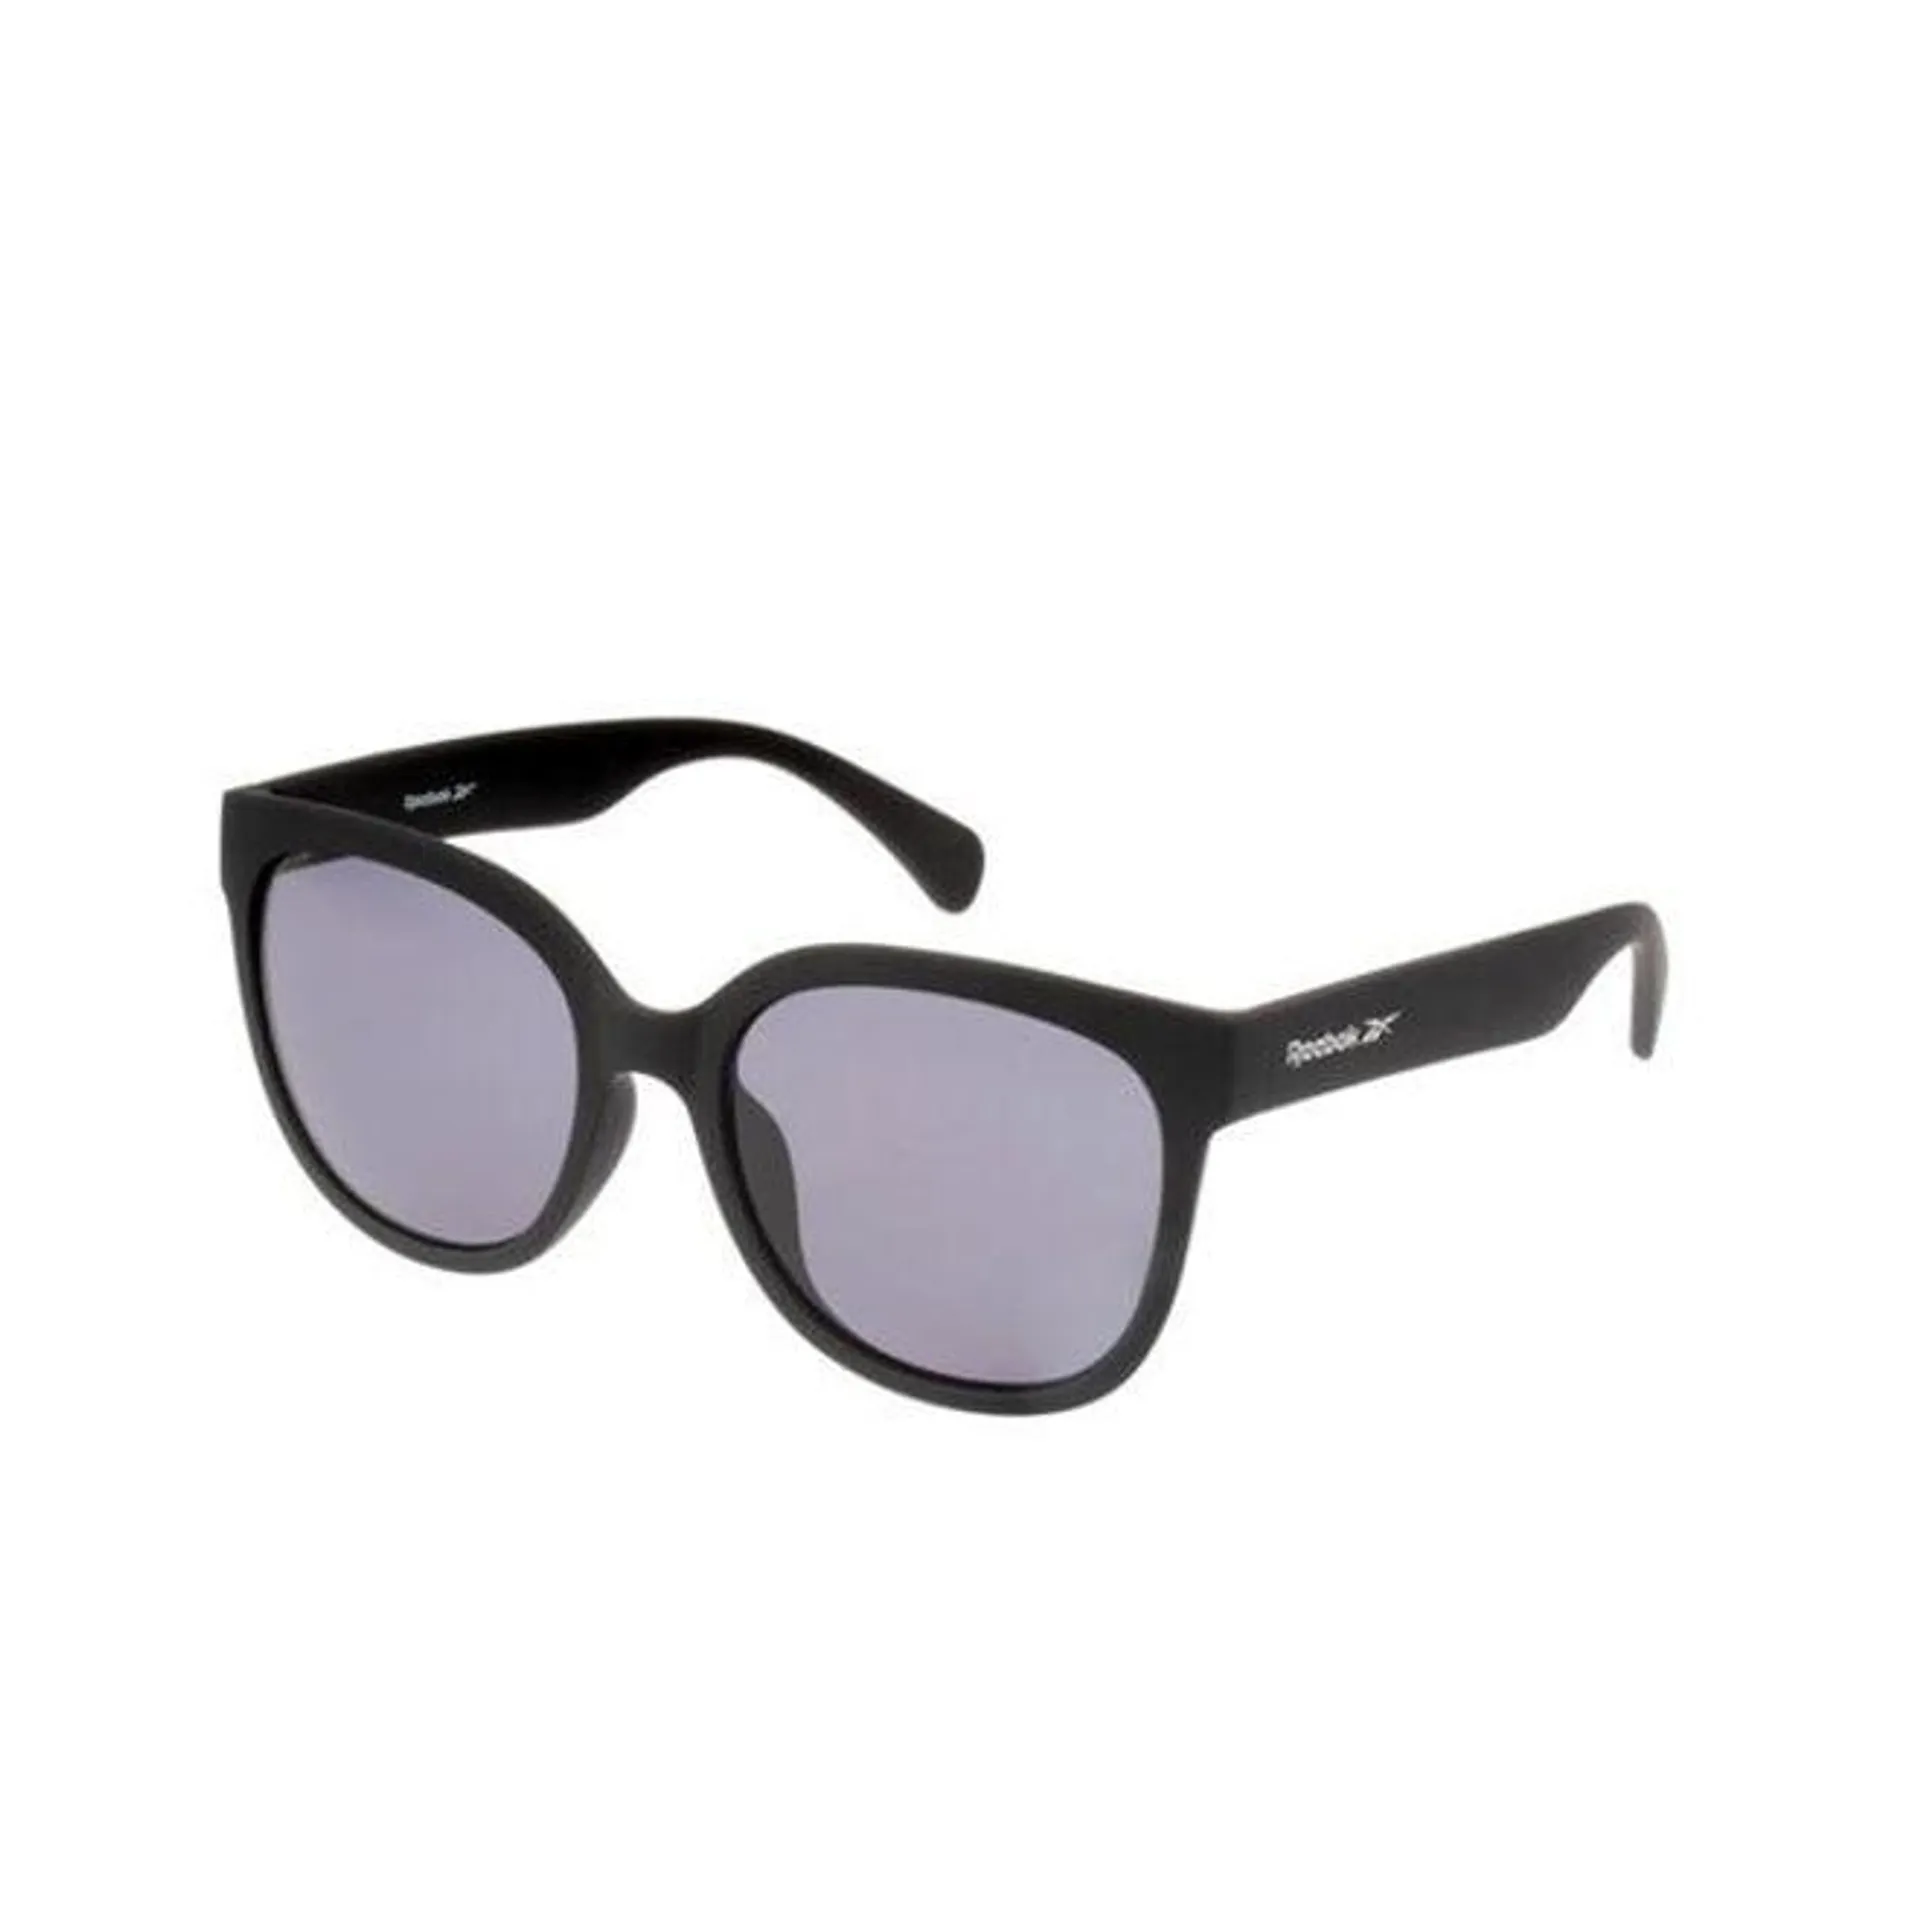 Reebok Mens 2104 Sports Sunglasses in Black